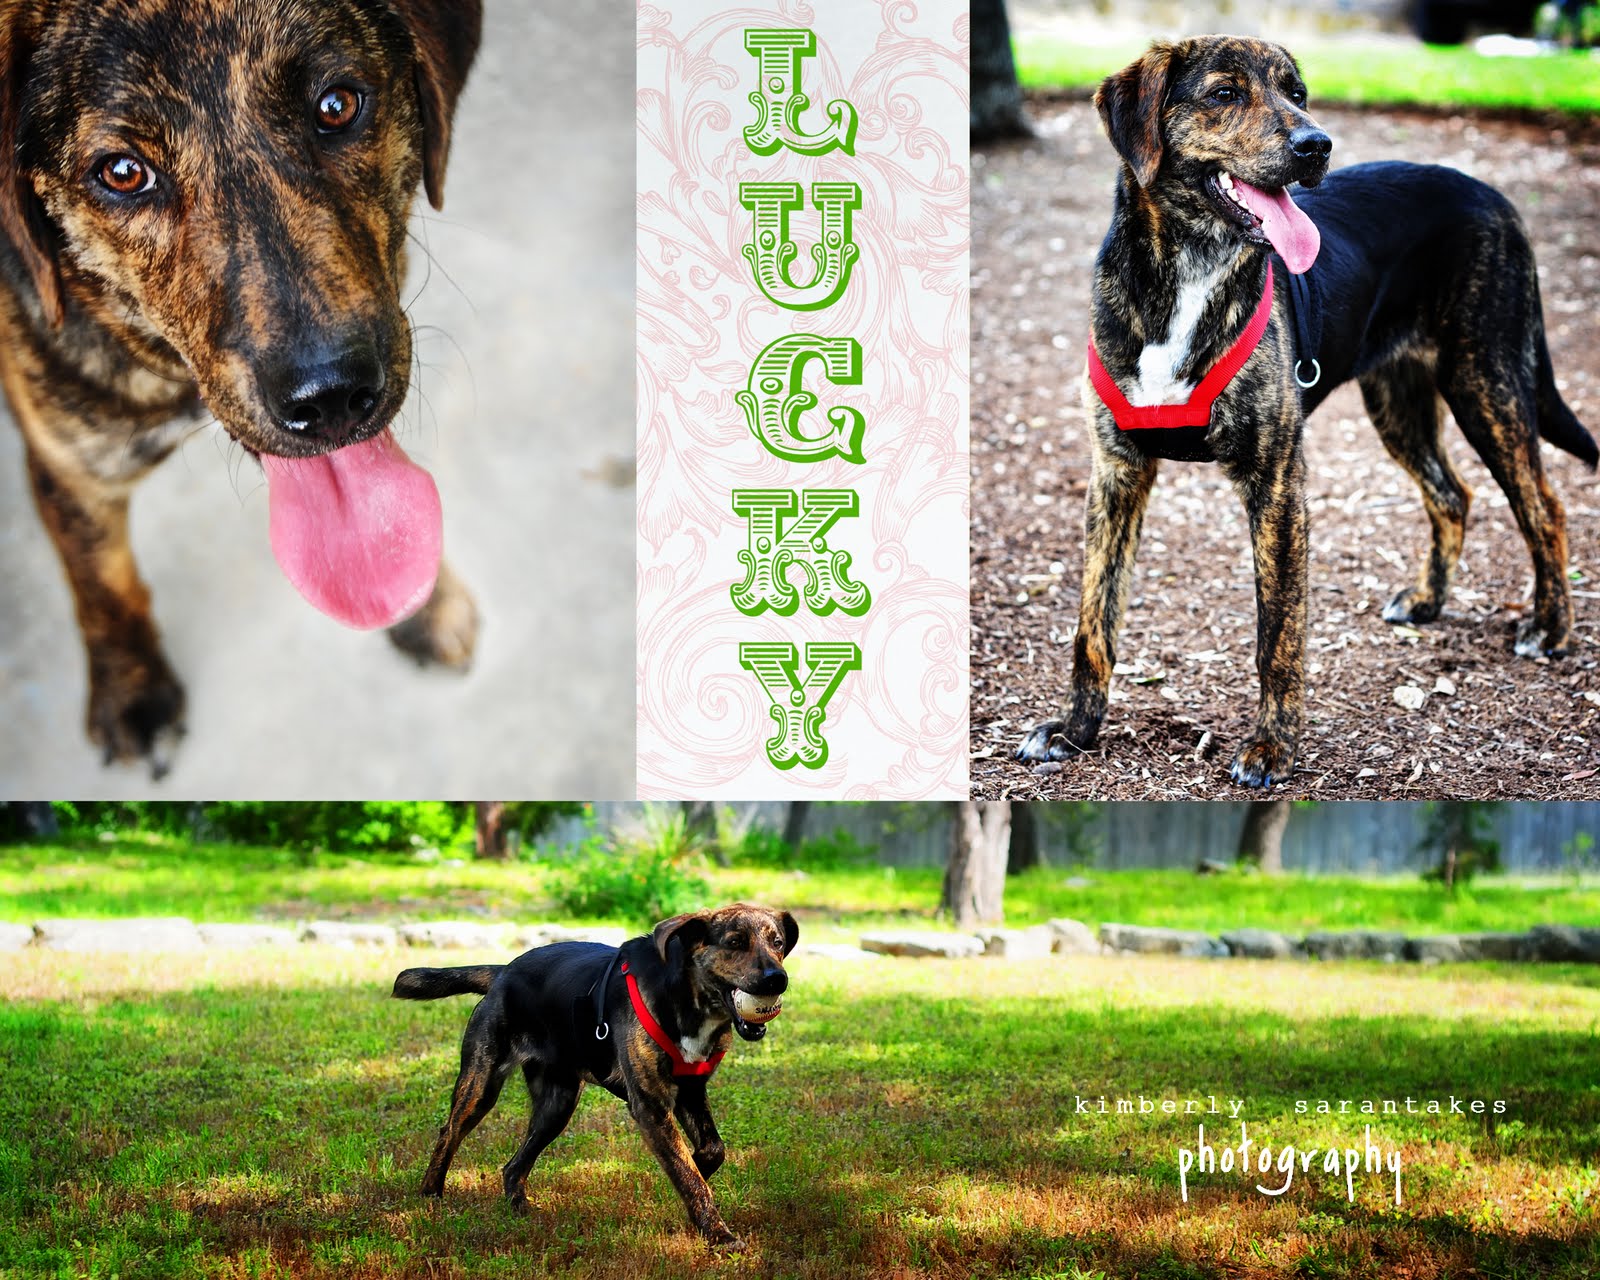 zogblog: LUCKY DOG / Austin Pet Photographer